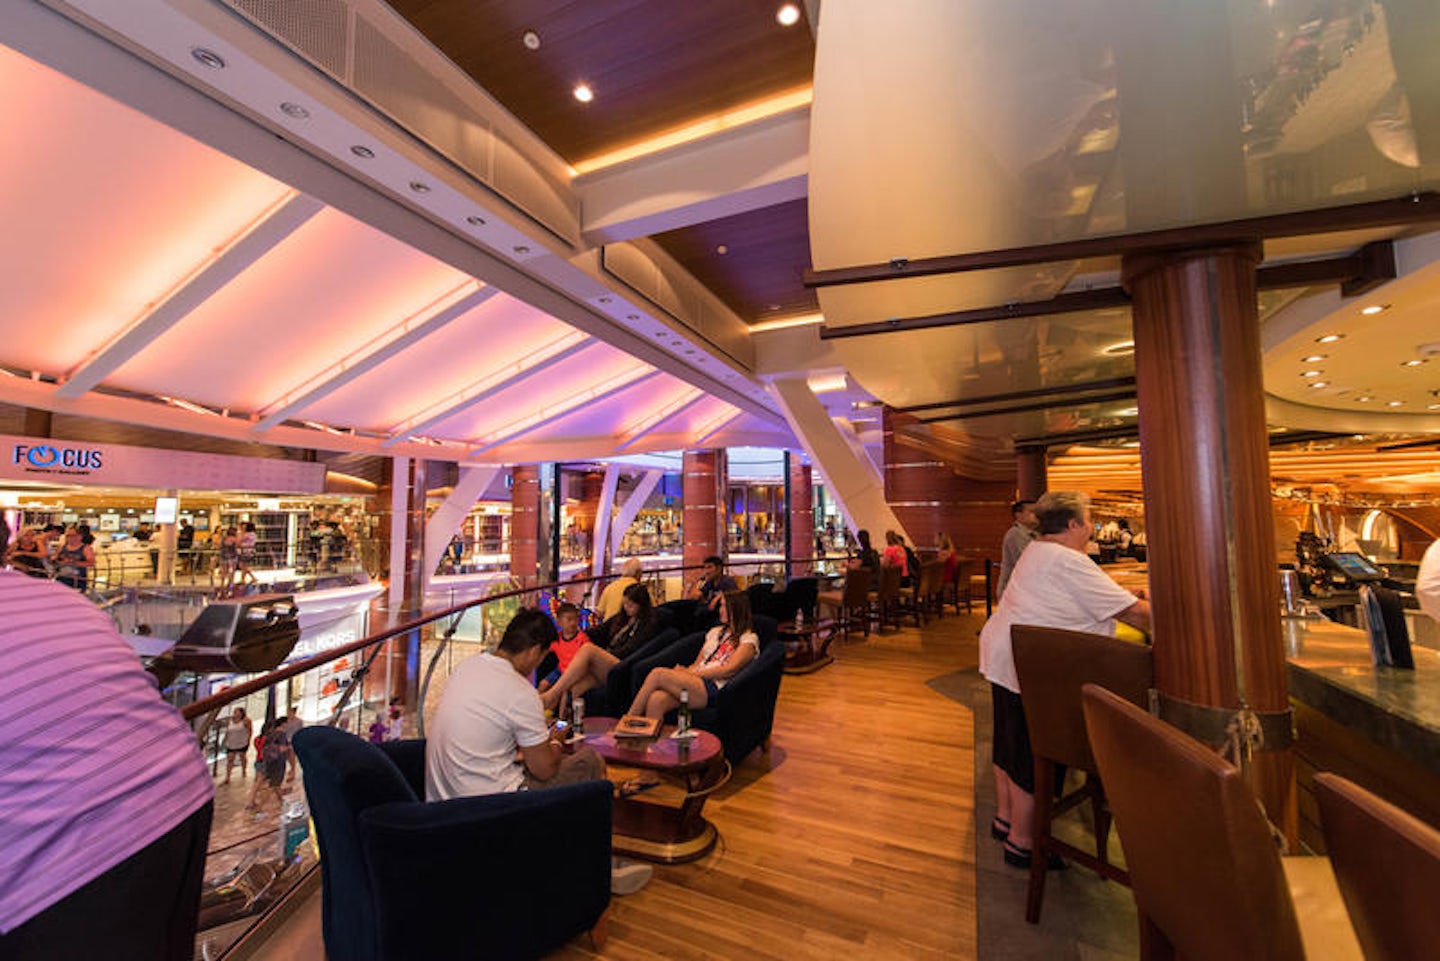 Schooner Bar on Oasis of the Seas